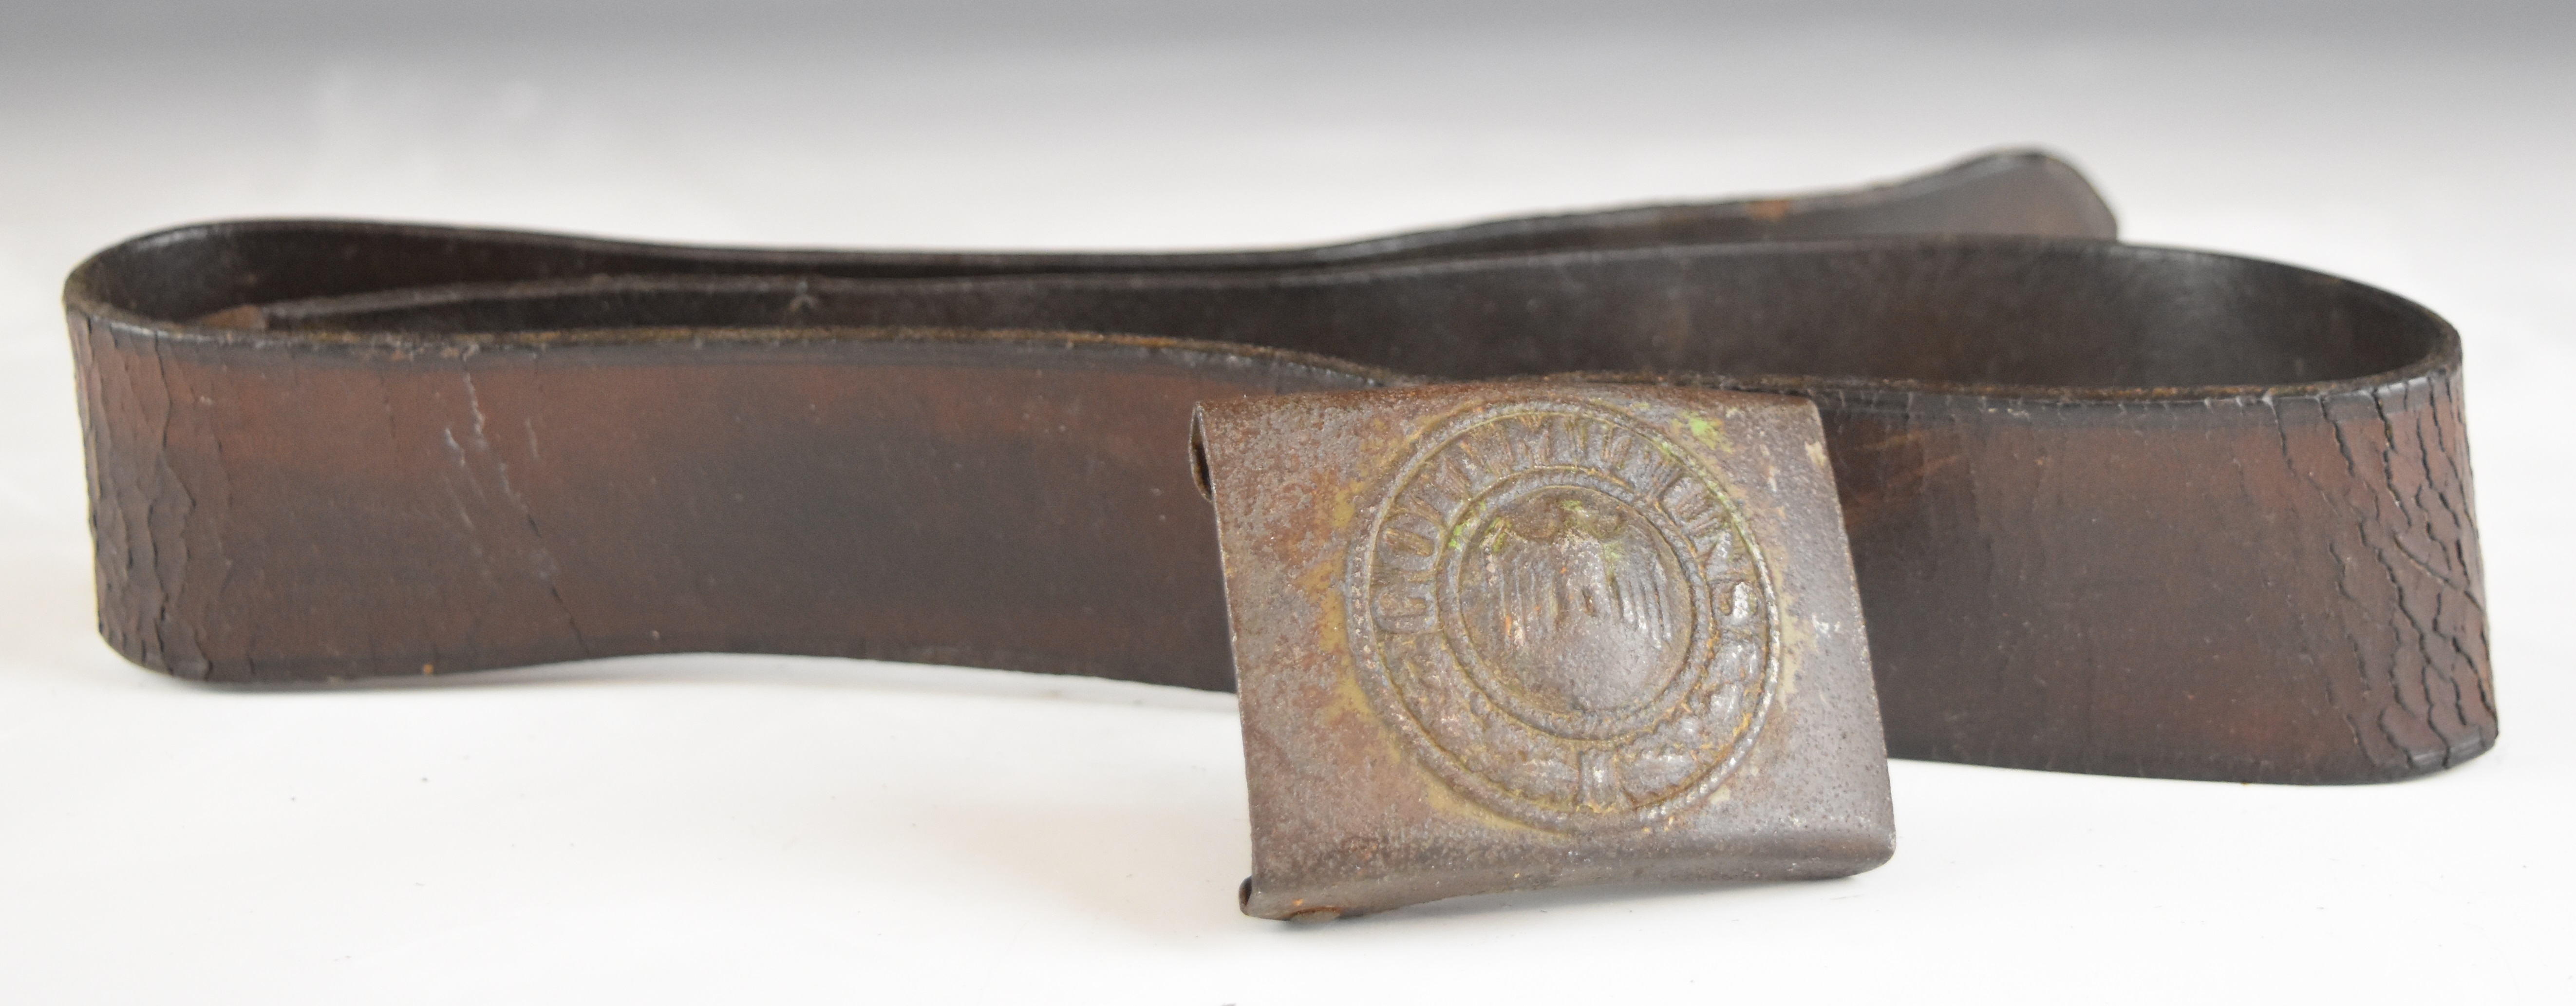 German WW2 Nazi Third Reich belt buckle and belt - Image 4 of 4